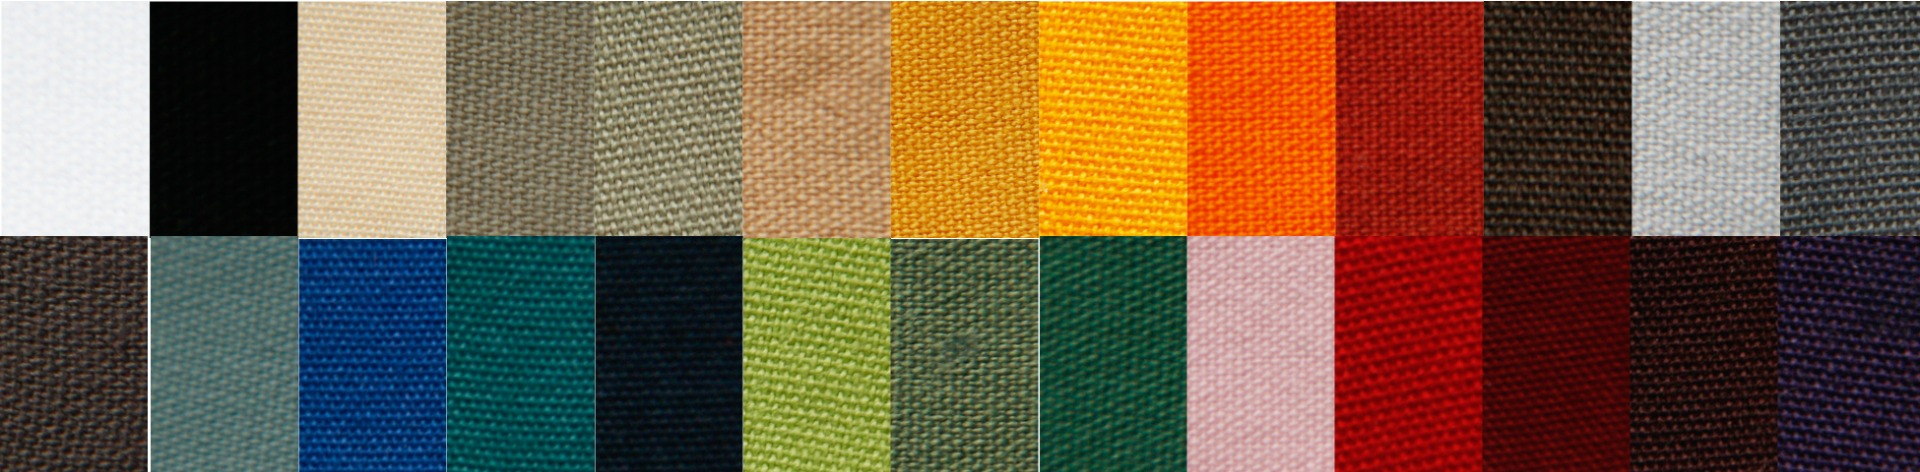 Coloured Napkins, Fabric Matt Textured 100% Polyester